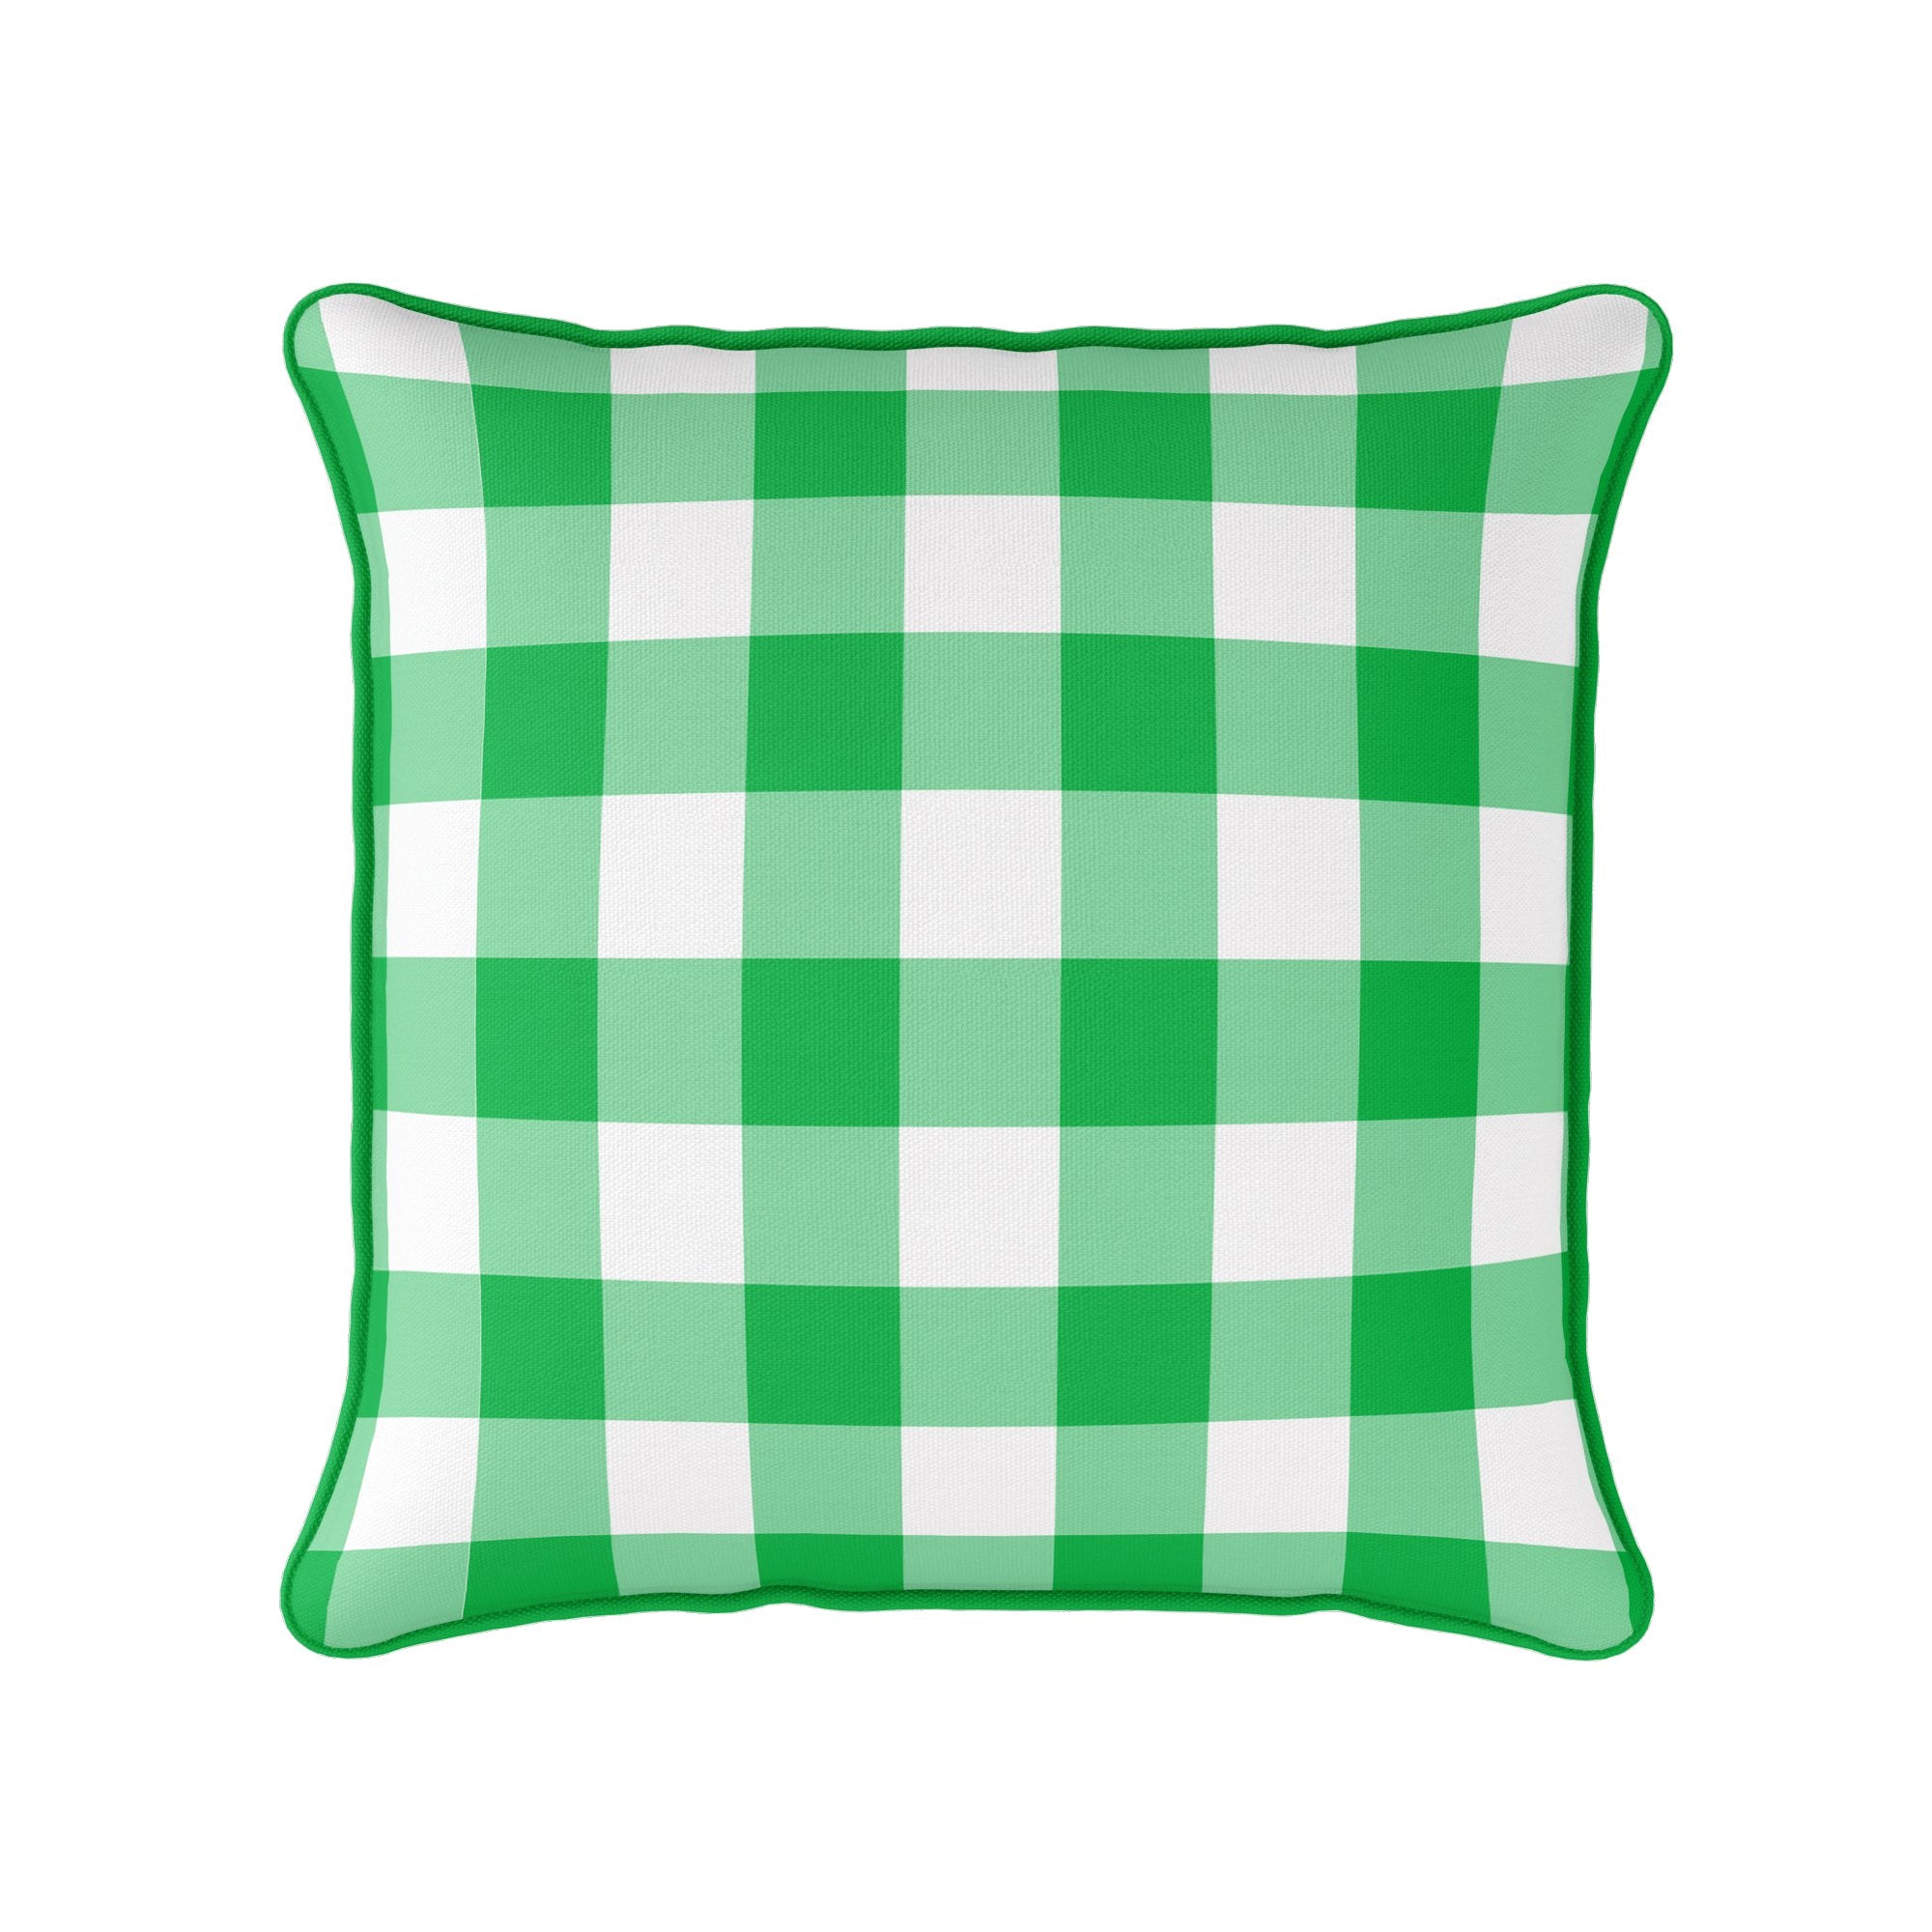 Gingham Check Medium Cushion - Greens - Hydrangea Lane Home